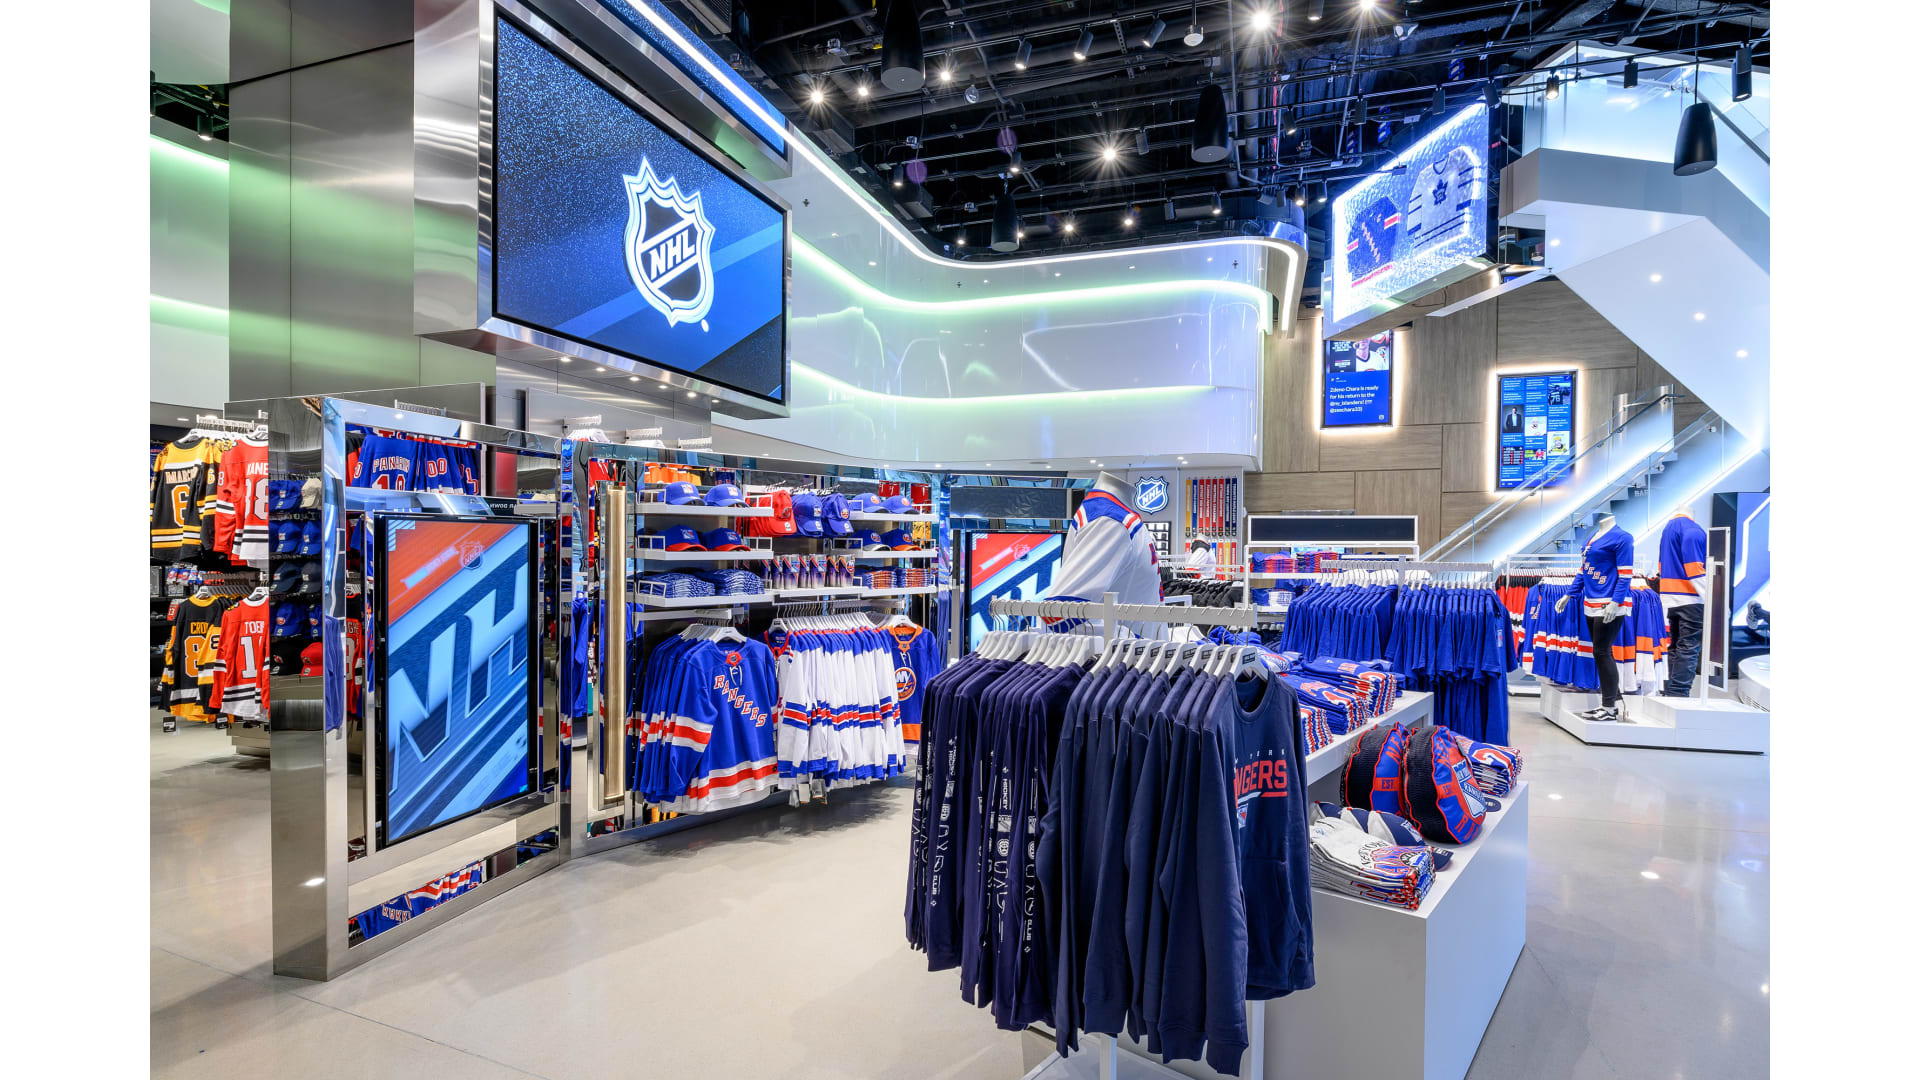 NHL Store opening in Manhattan 